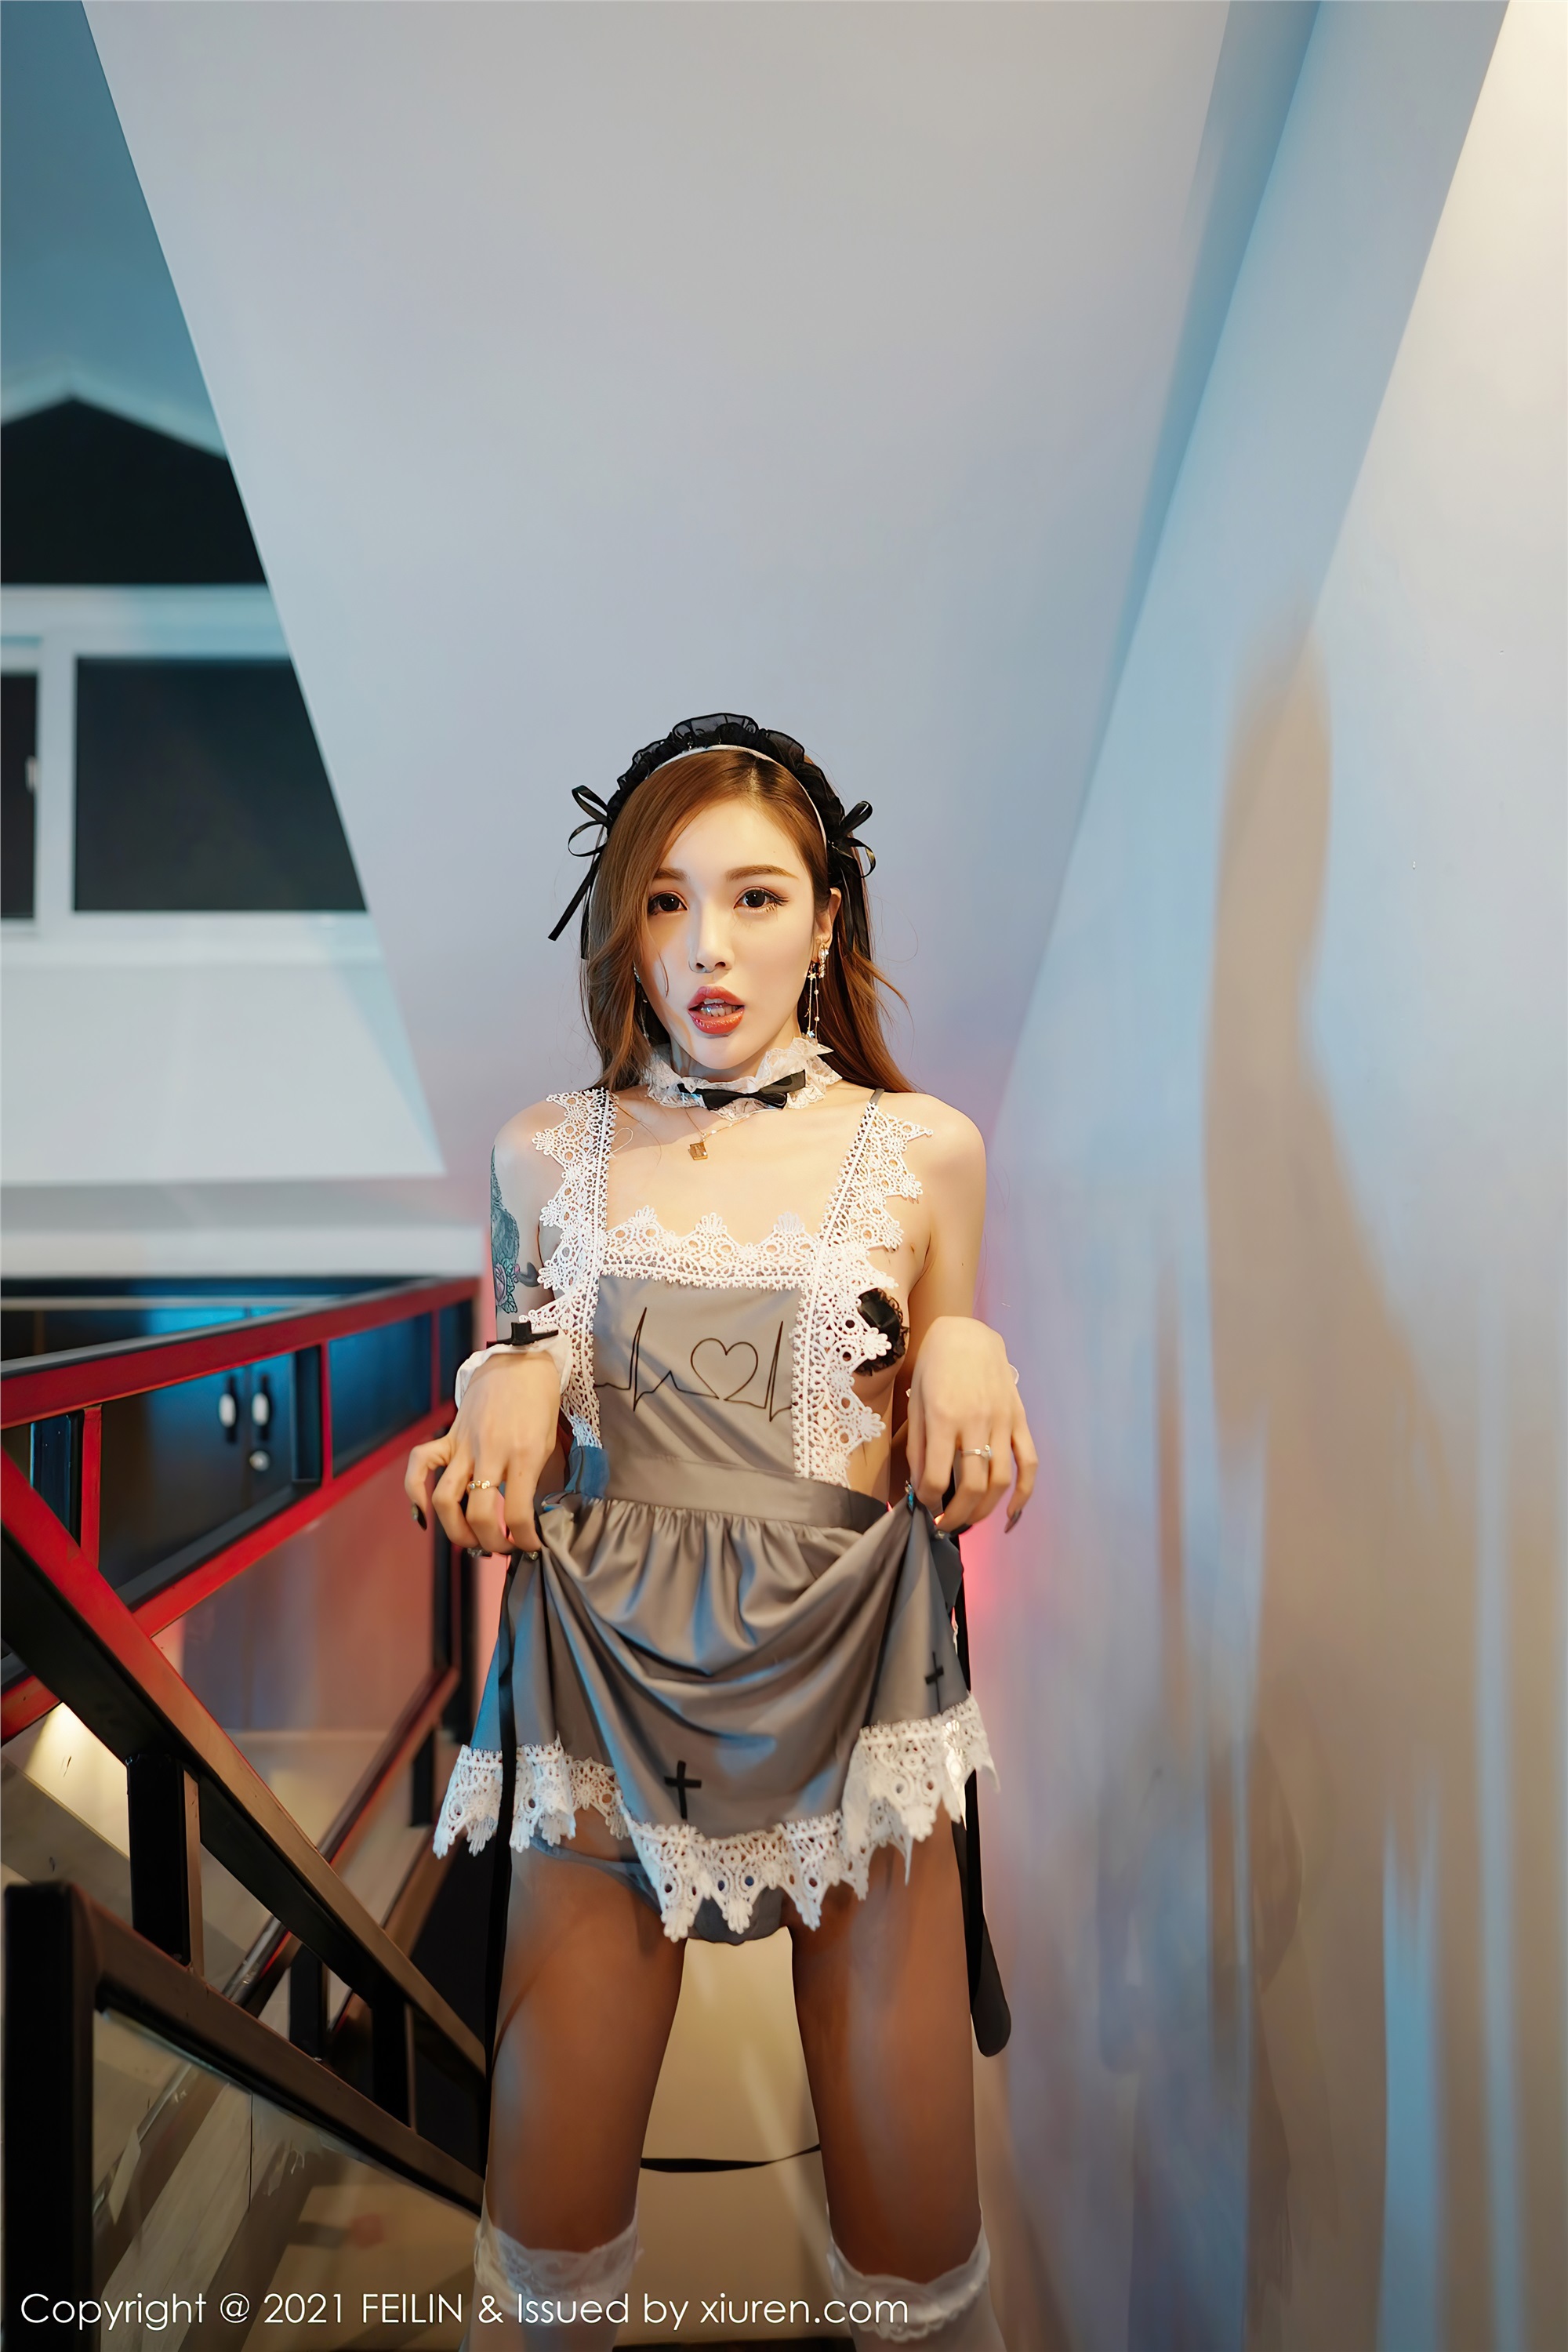 Feilin girl 2021.03.02 Vol.377 MENGNAN maid lace